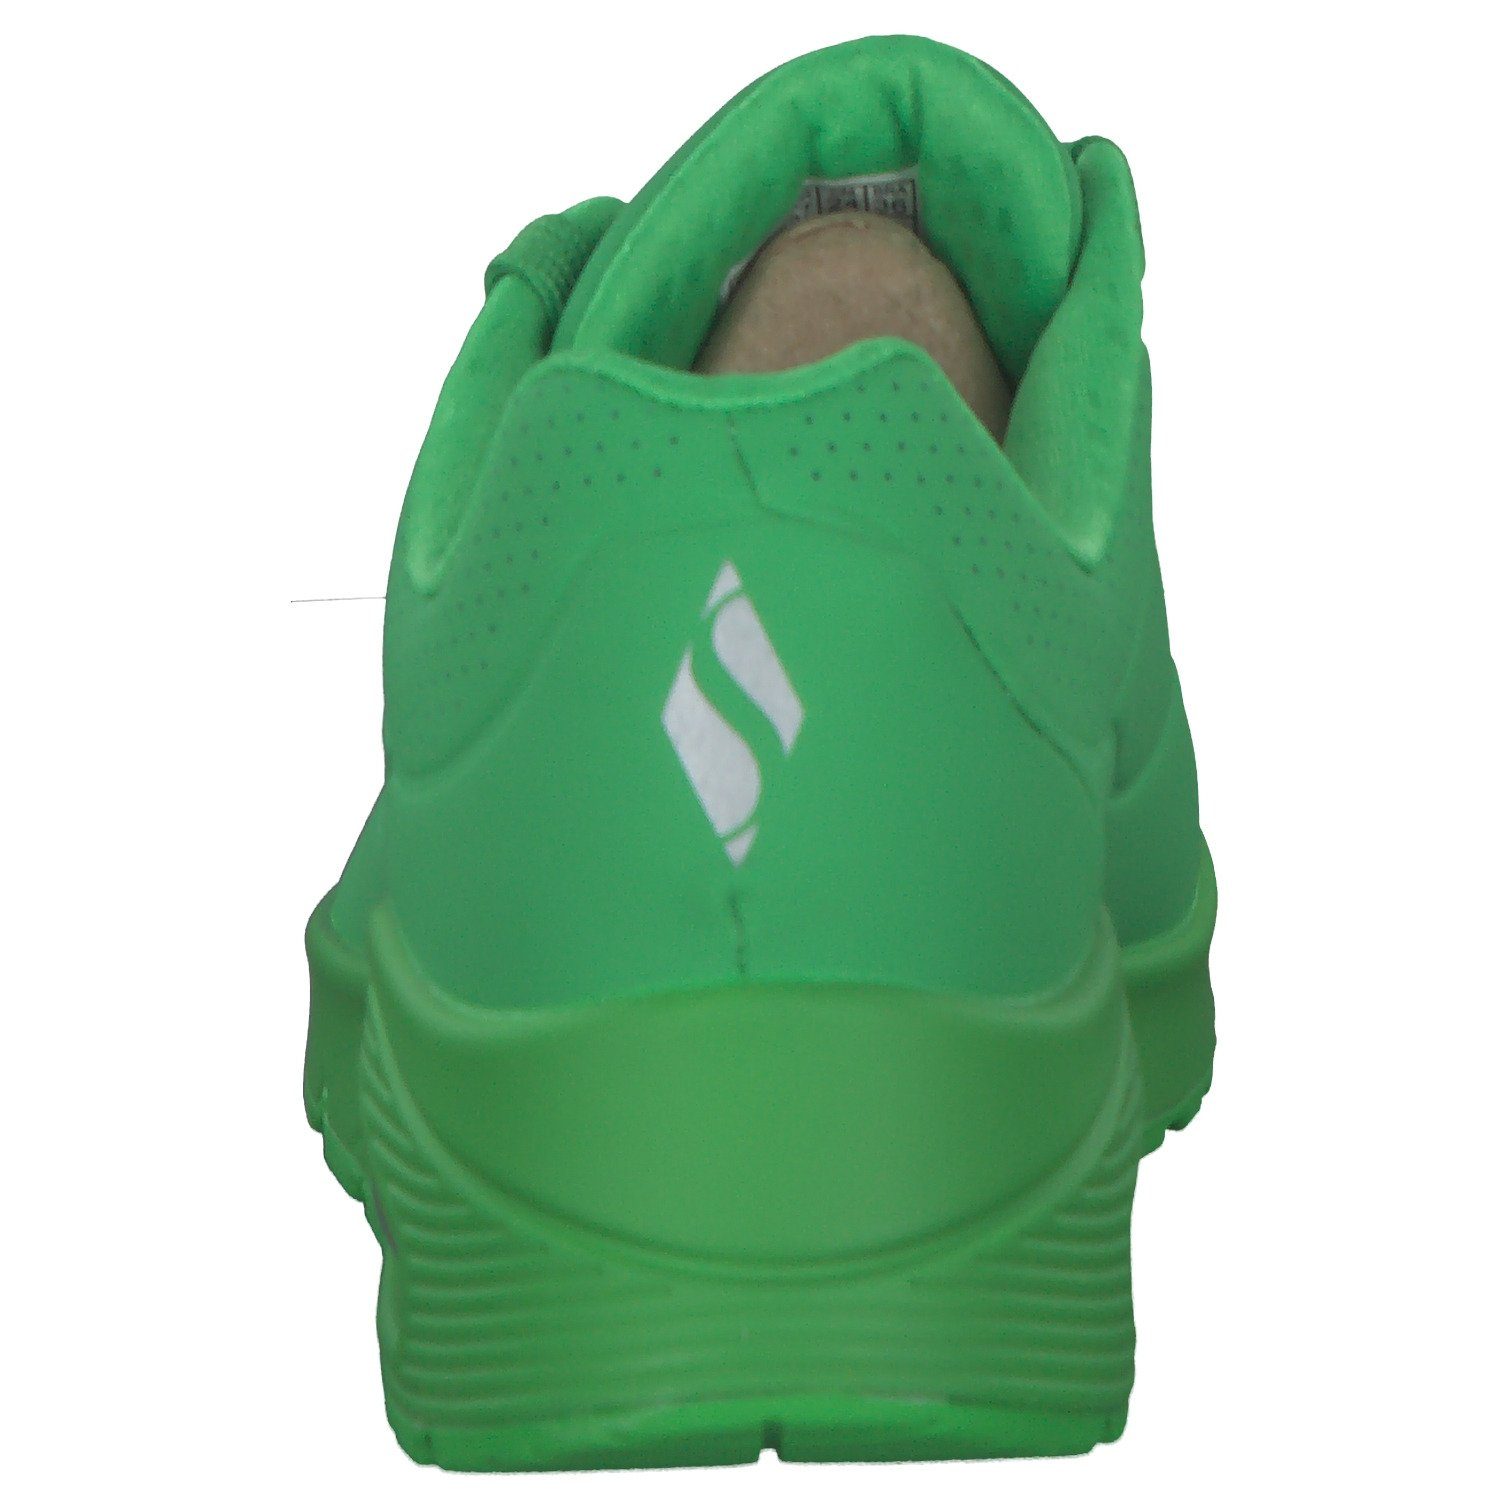 Green 73690 On (20203098) Air Sneaker Skechers Stand Uno Skechers